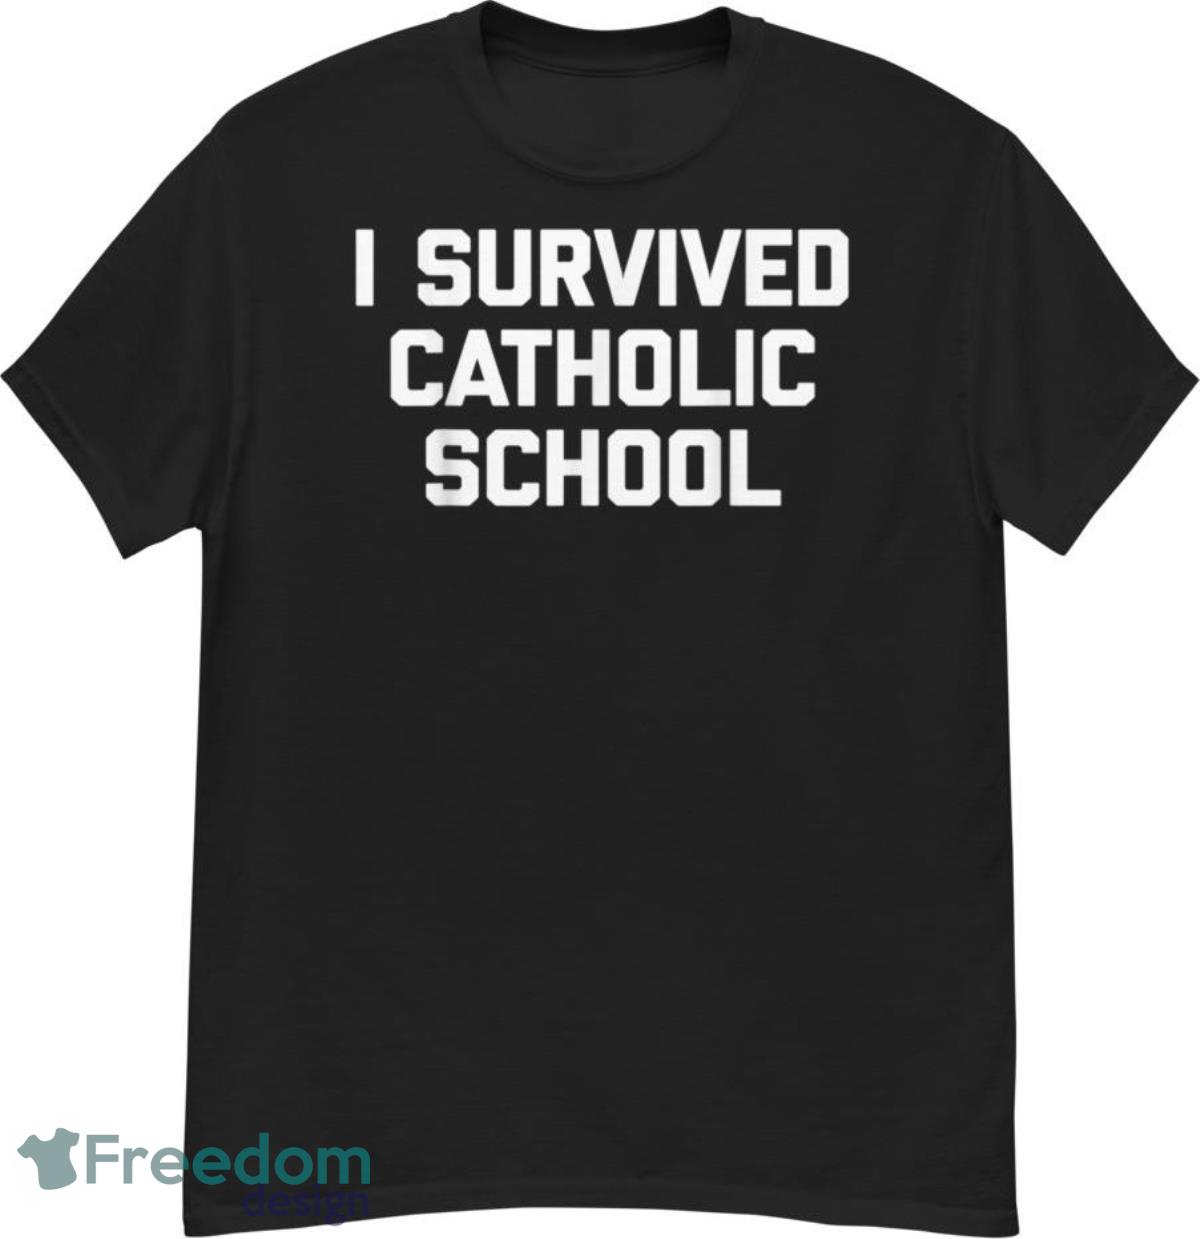 I Survived Catholic School Shirt - I Survived Catholic School Shirt